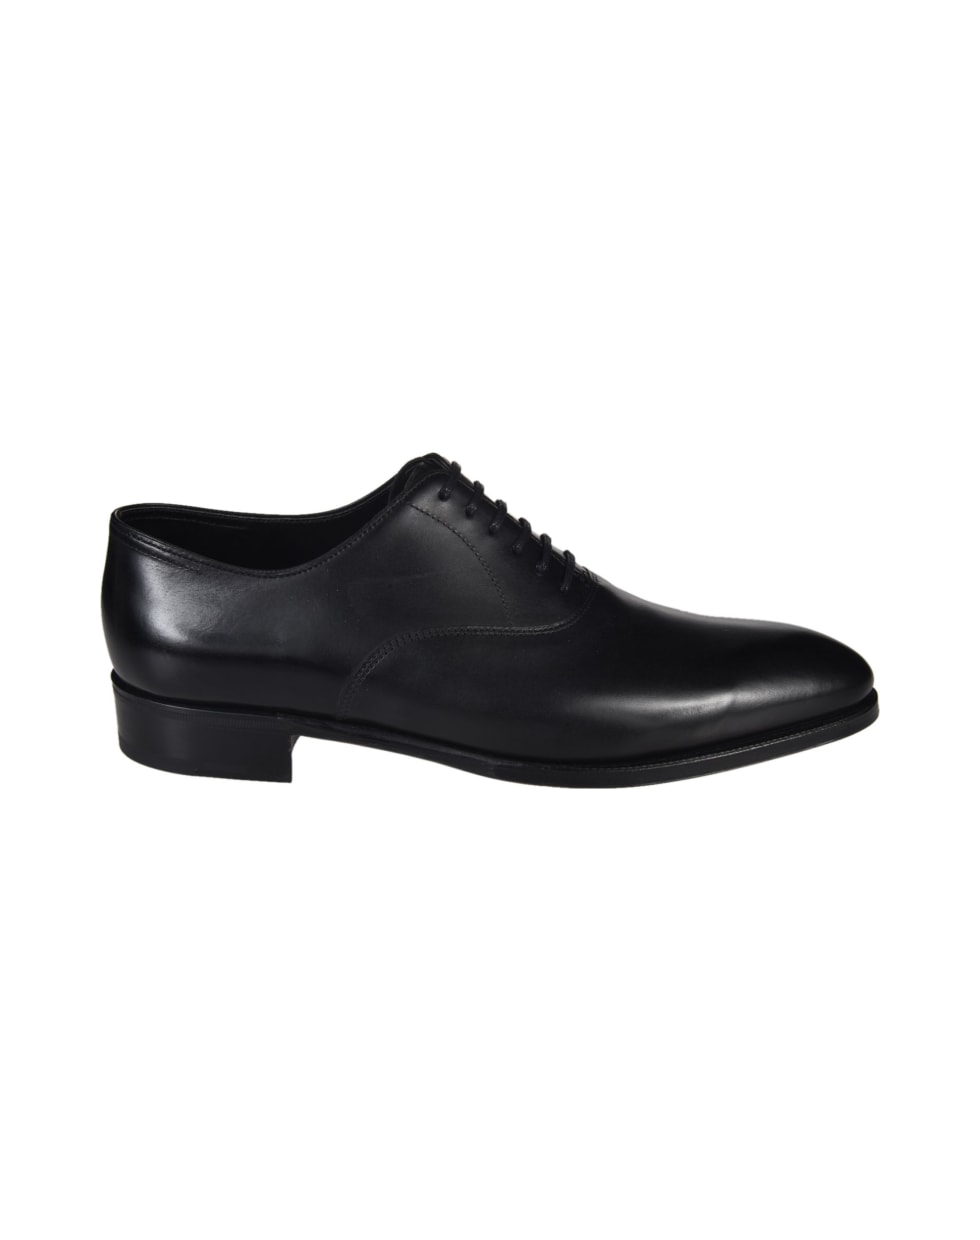 John Lobb Seaton Oxford Shoes - Black